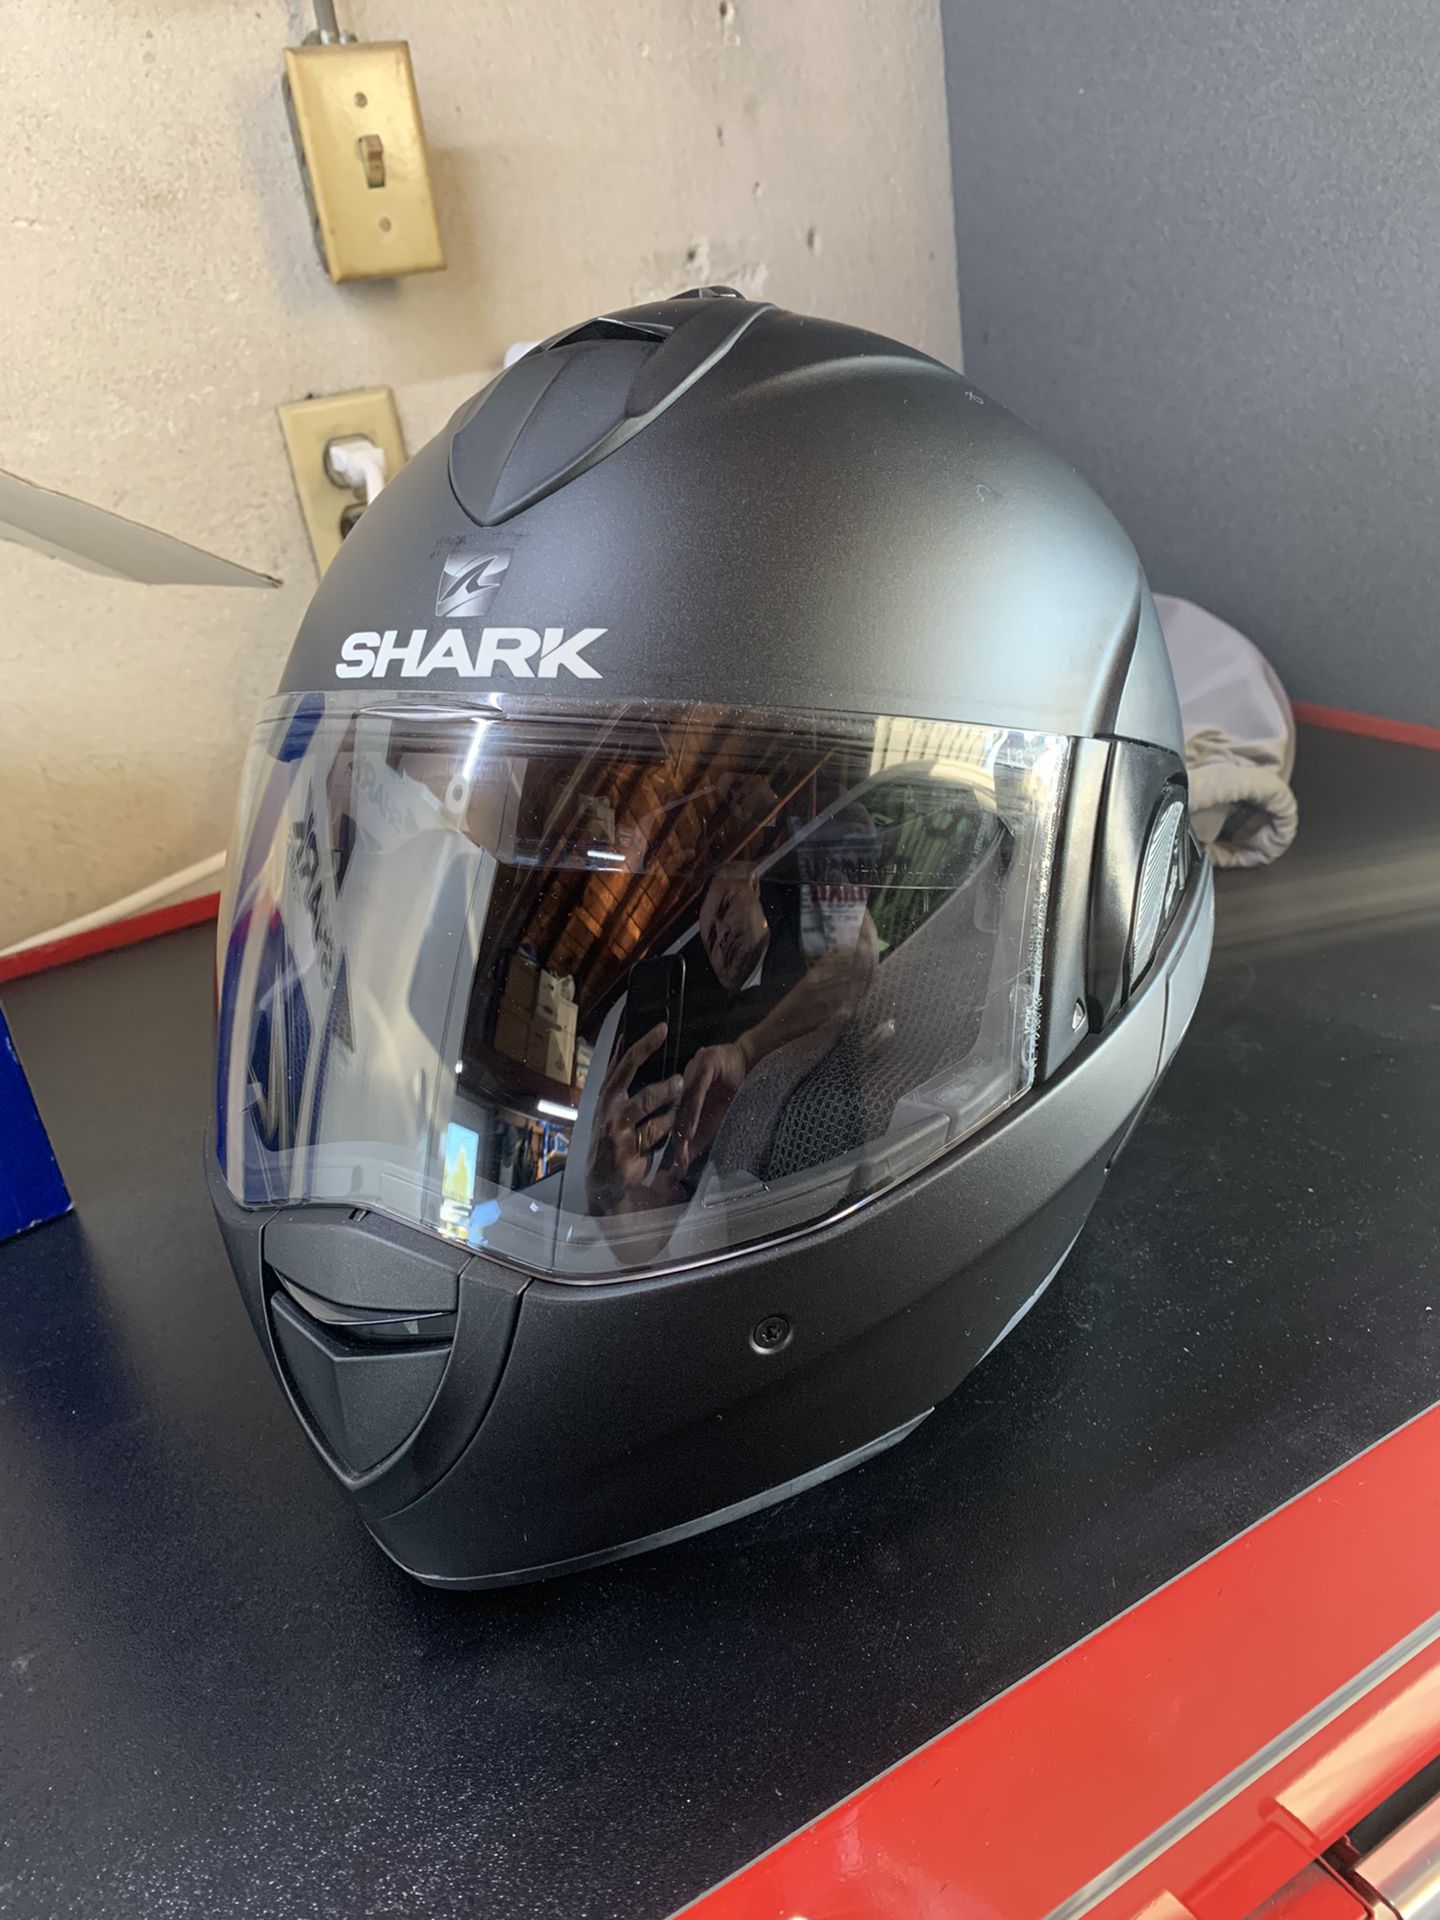 Shark Evoline S3 Motorcycle Helmet - Never Worn **Sharktooth” Capable